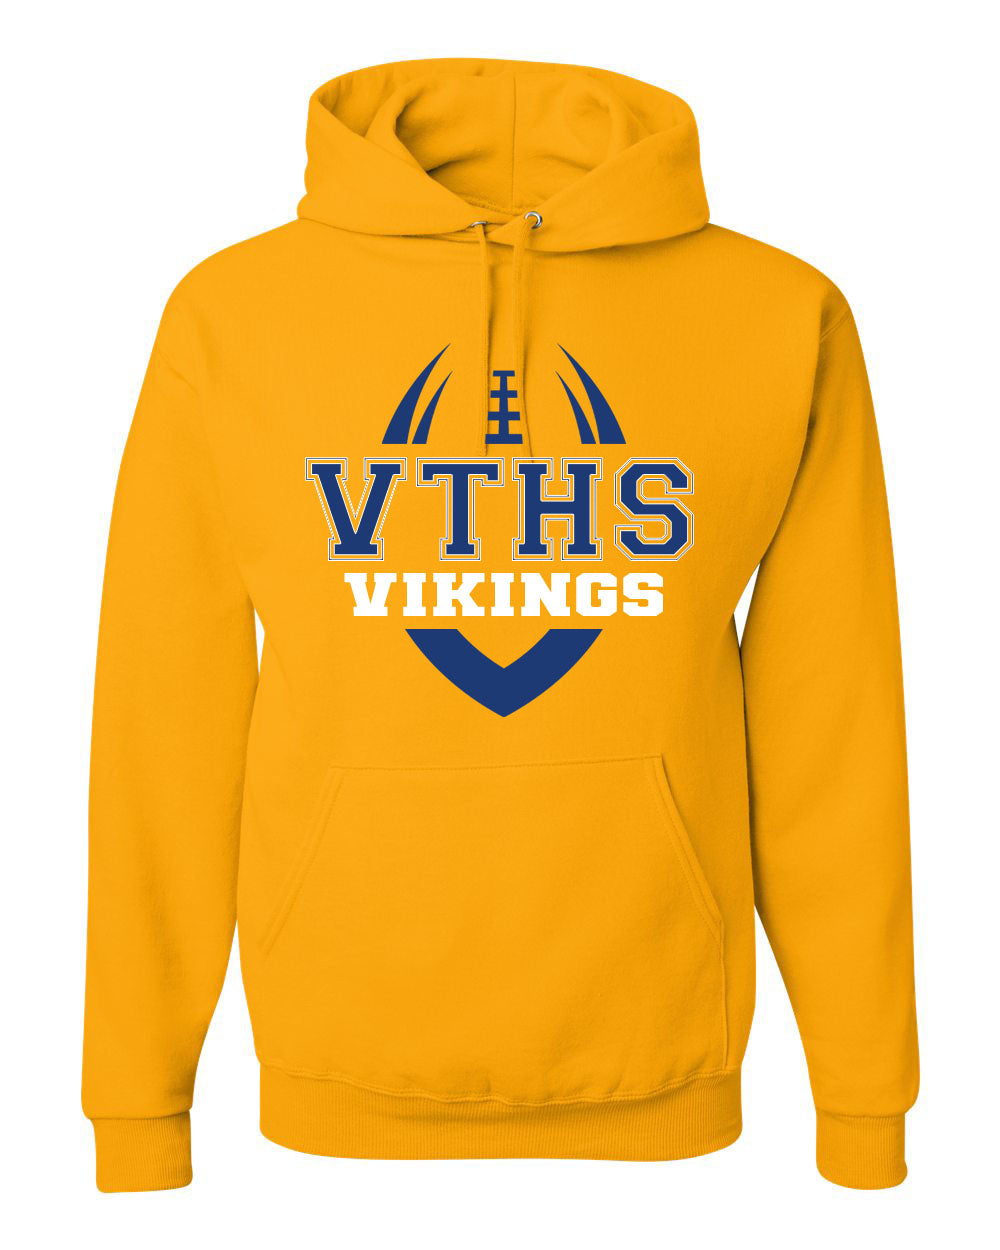 Vernon Football Design 1 Hooded Sweatshirt, Gold